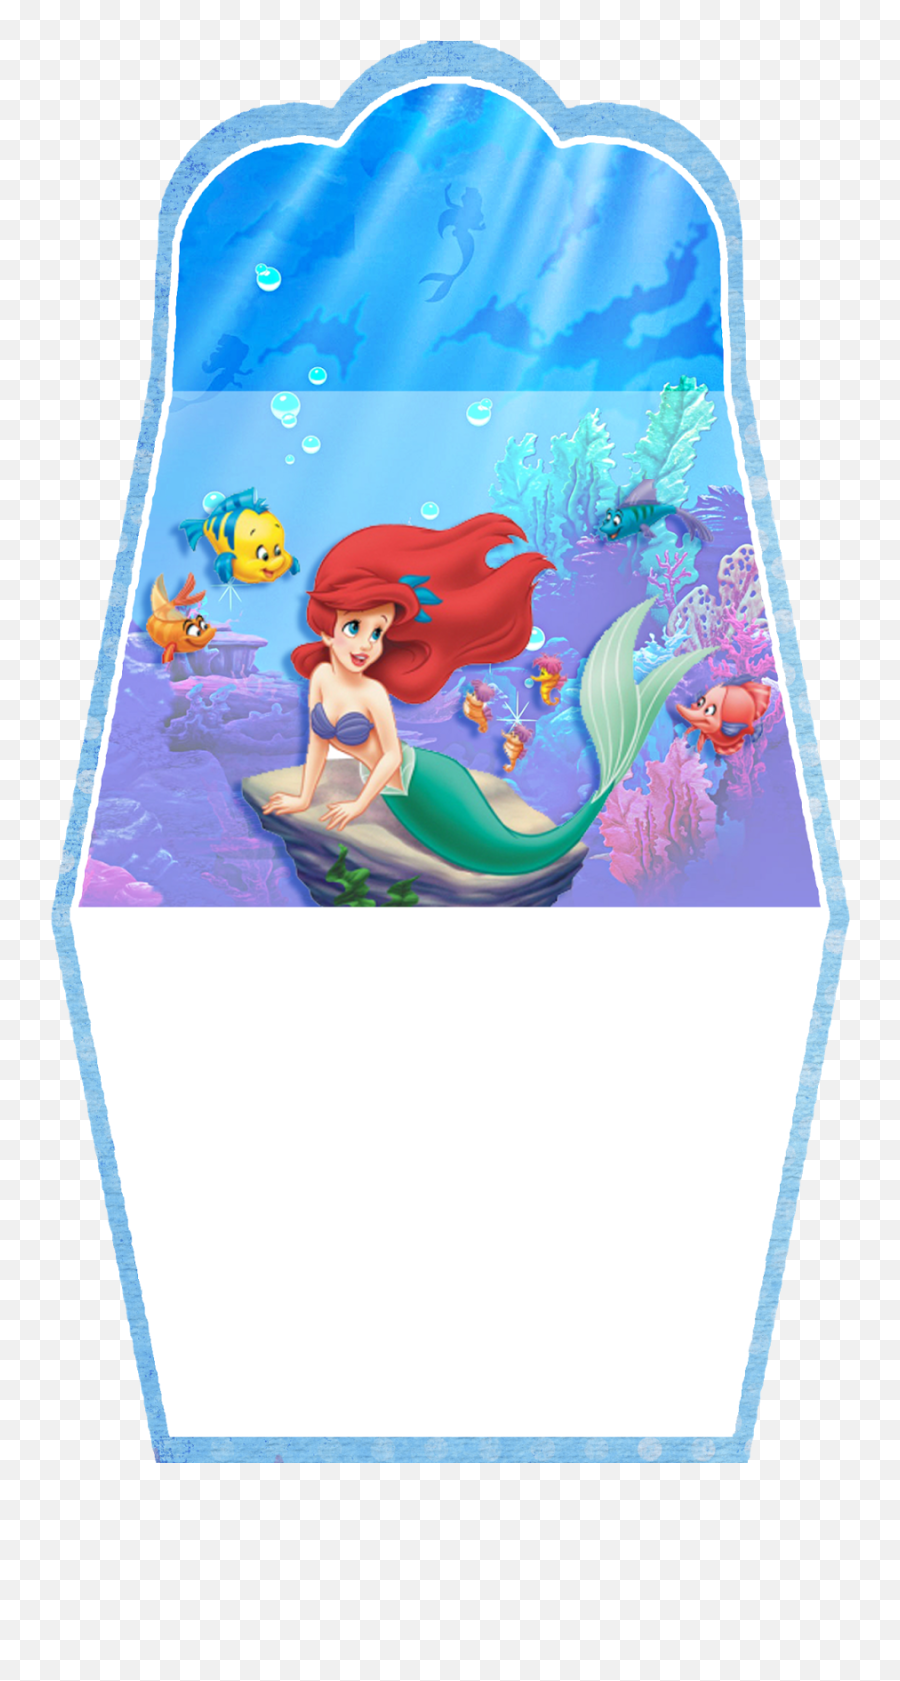 La Sirenita Png - The Little Mermaid Birthday Free Printable Imagenes De La Sirenita Para Imprimir,Free Mermaid Png